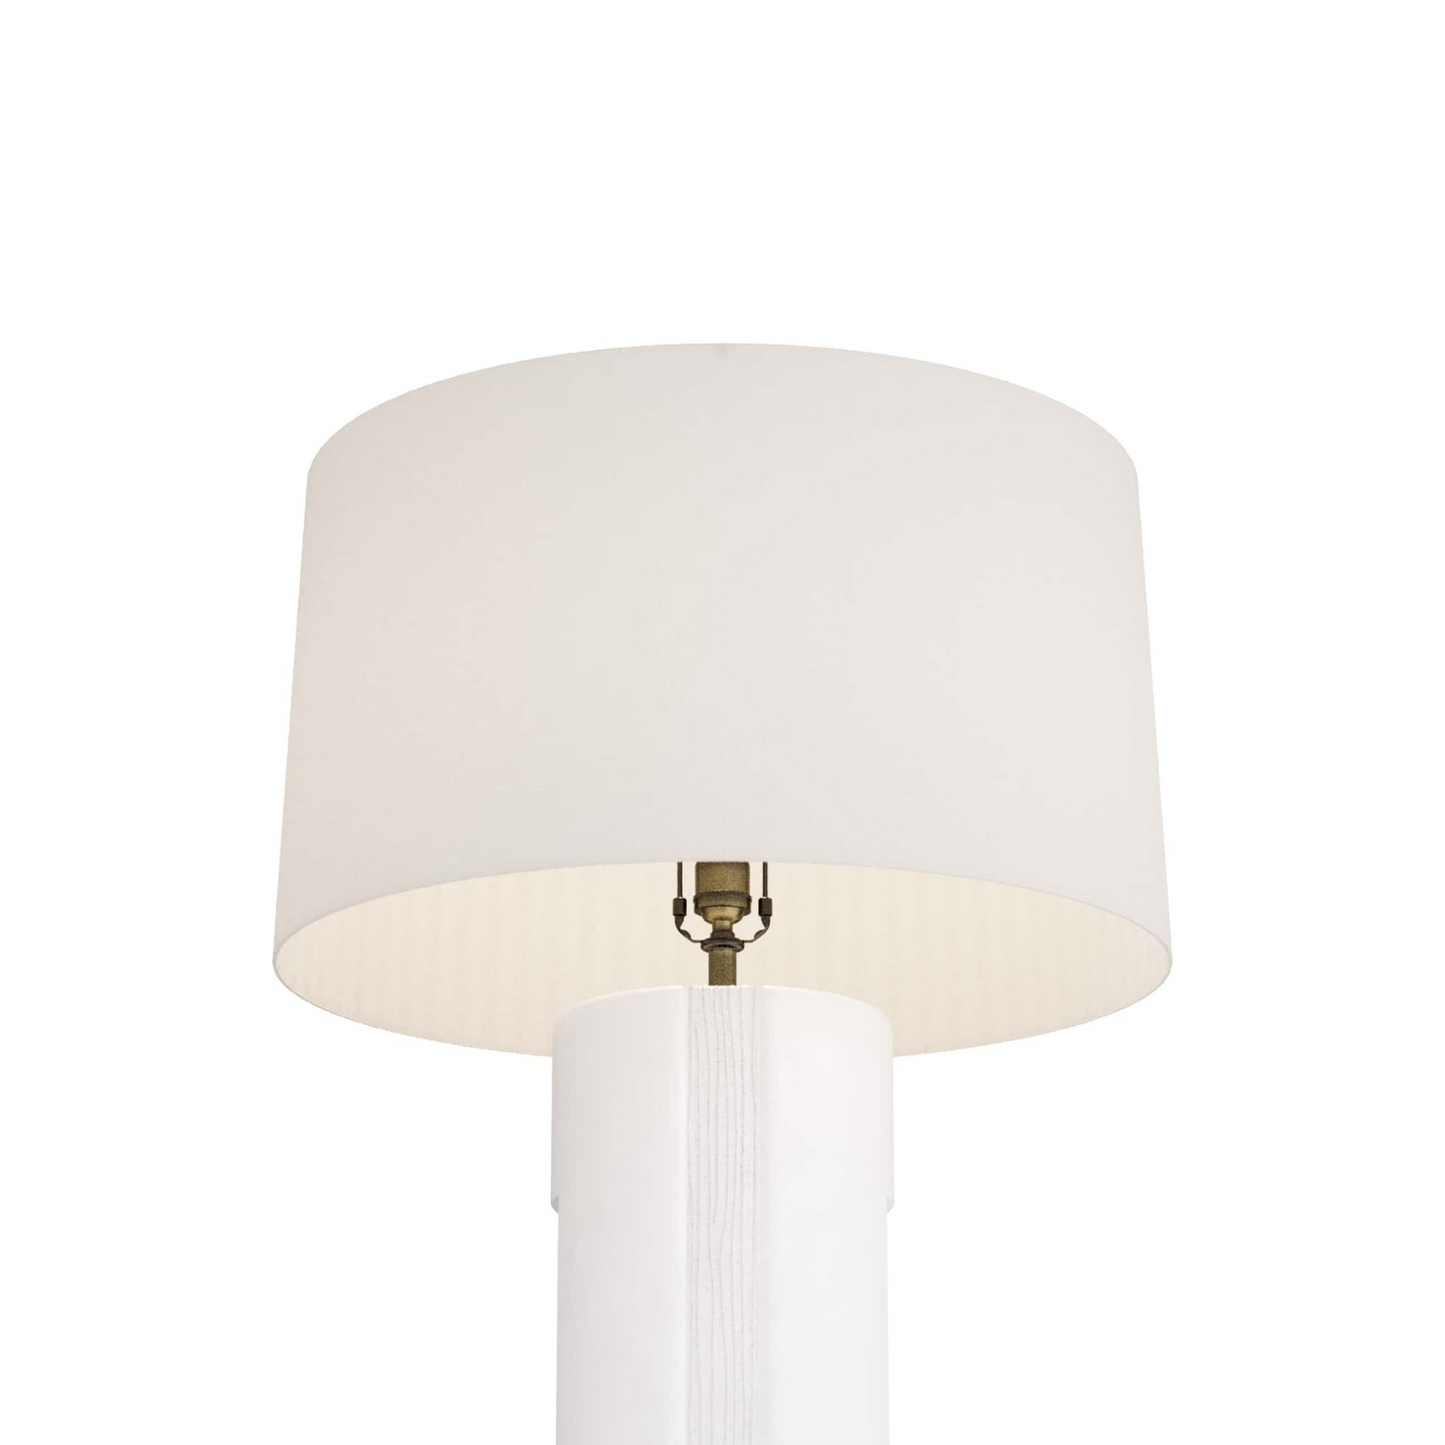 Wyatt Lamp - Elegant Indoor Lighting with Rolled Edges and Hardback Shade